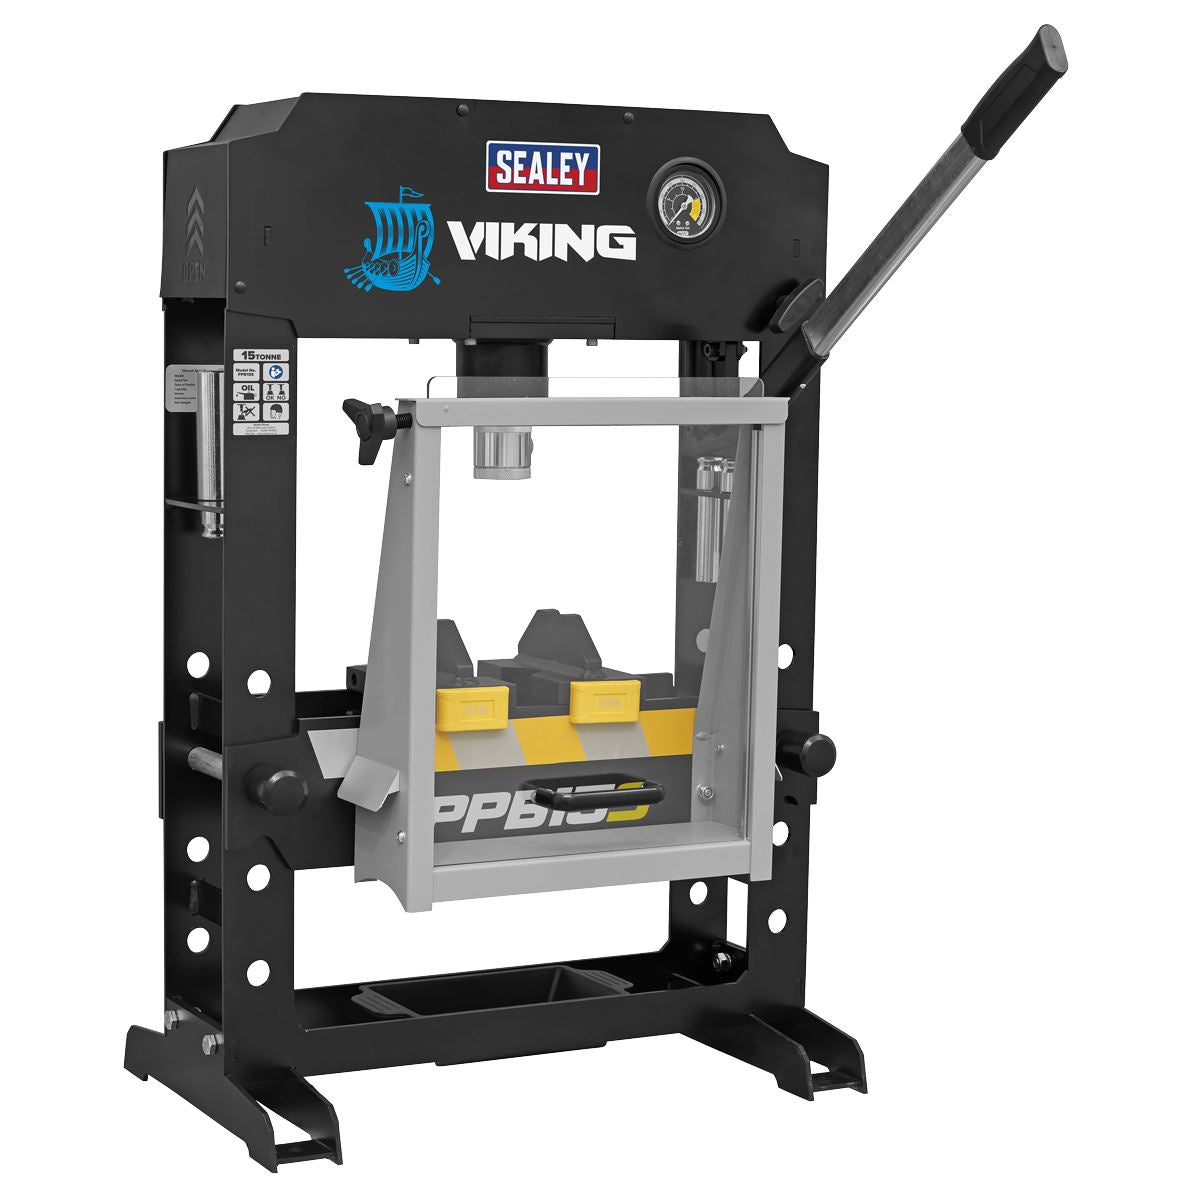 Sealey Viking Bench Type Hydraulic Press 15 Tonne